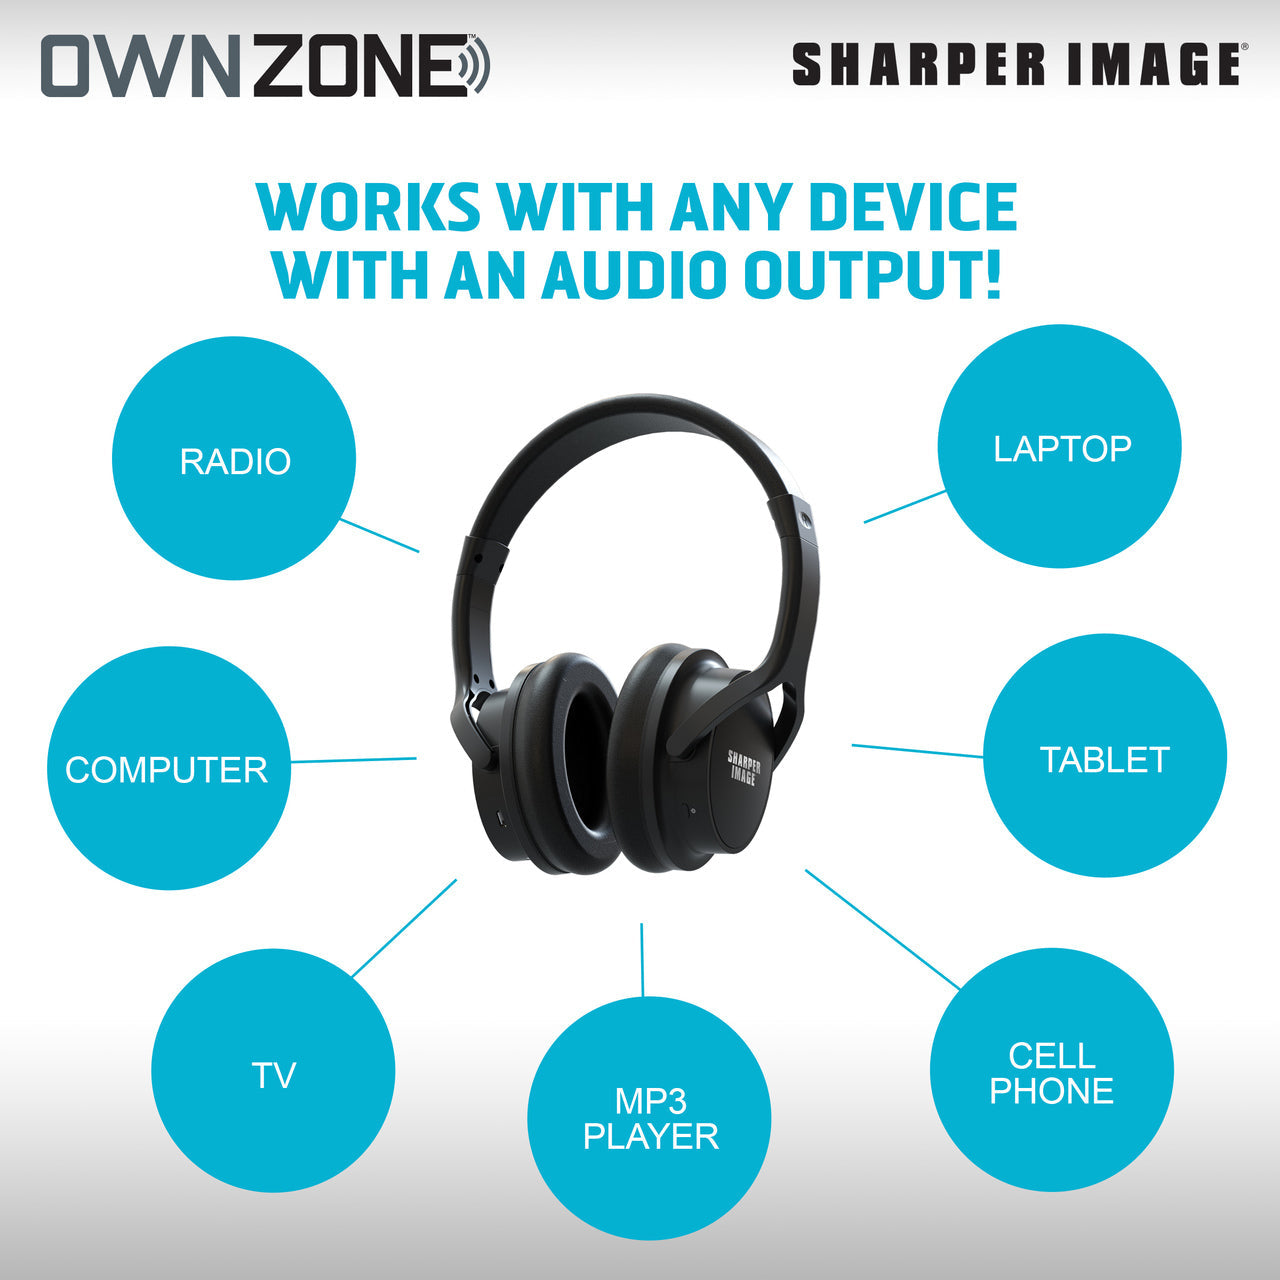 Sharper Image Own Zone DLX Wireless TV Headphones with Transmitter- Black